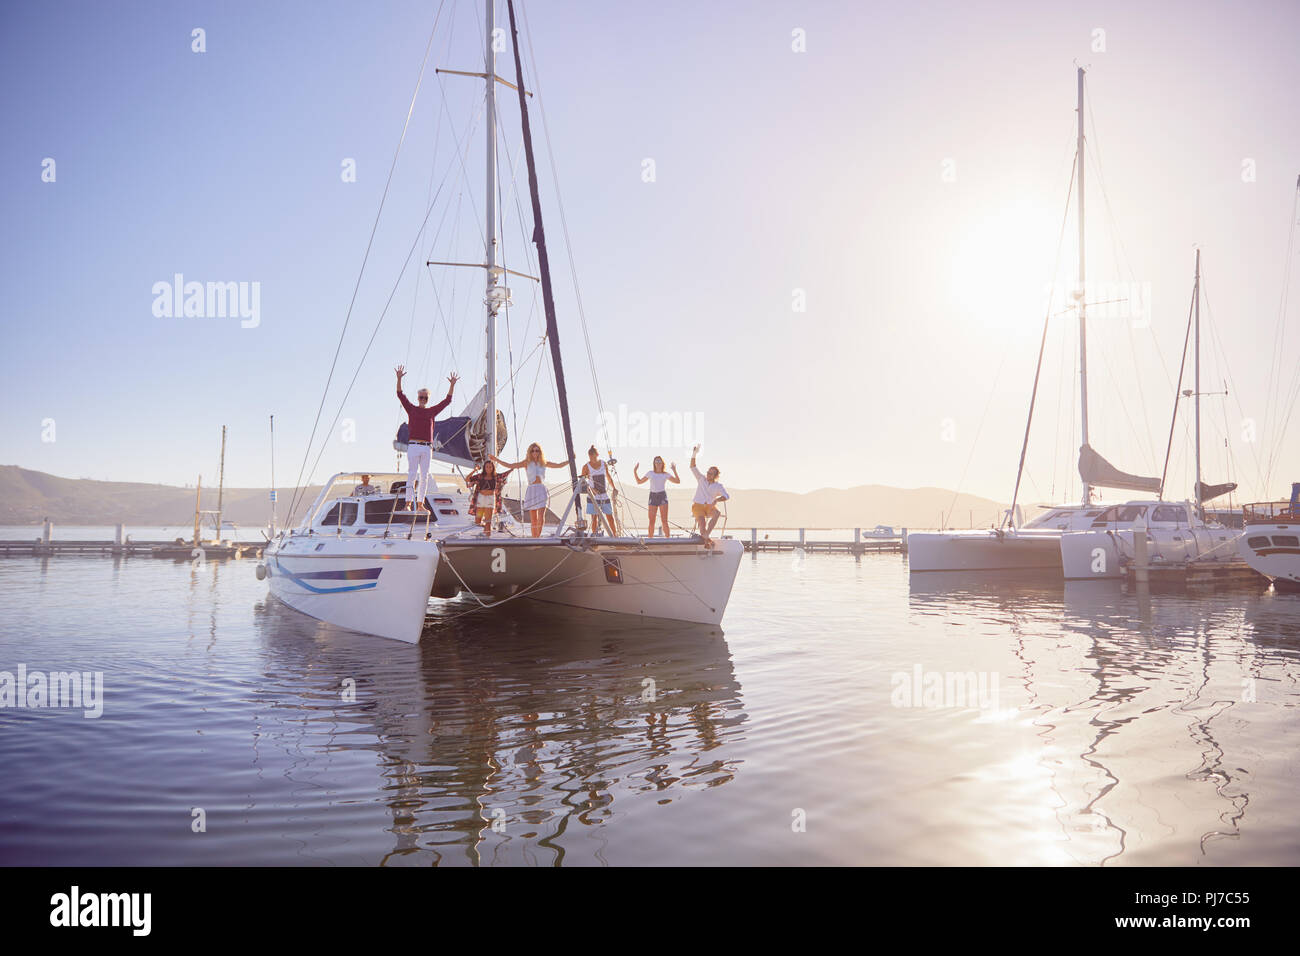 Portrait friends waving on catamaran in sunny harbor Stock Photo